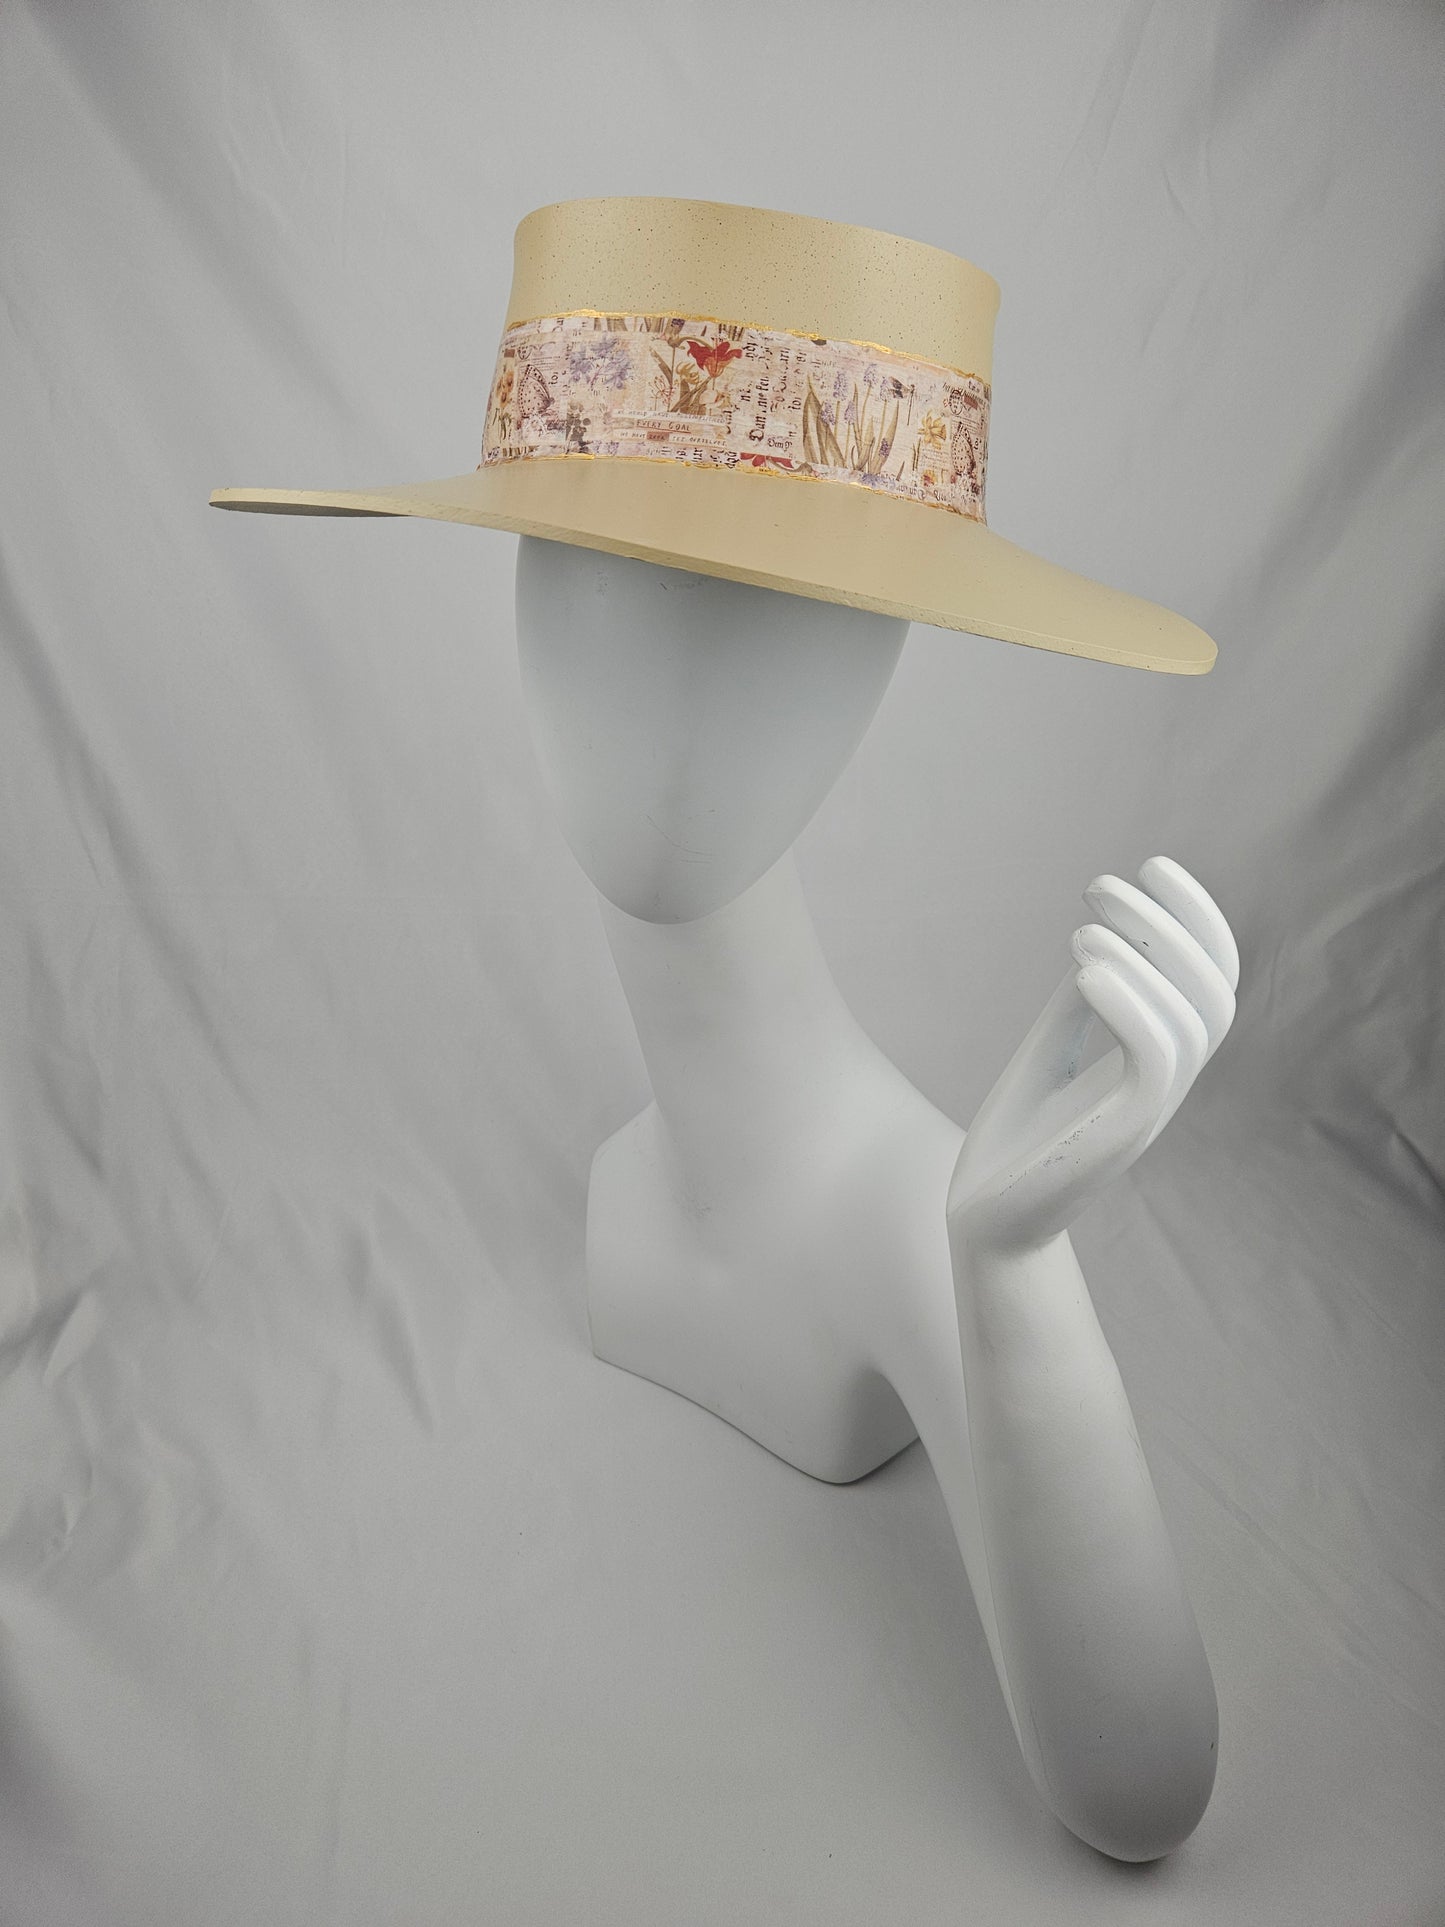 Tall Beautiful Beige Audrey Foam Sun Visor Hat with Stylish Vintage Botanical Collage Band: 1950s, Walks, Brunch, Tea, Golf, Wedding, Church, No Headache, Easter, Pool